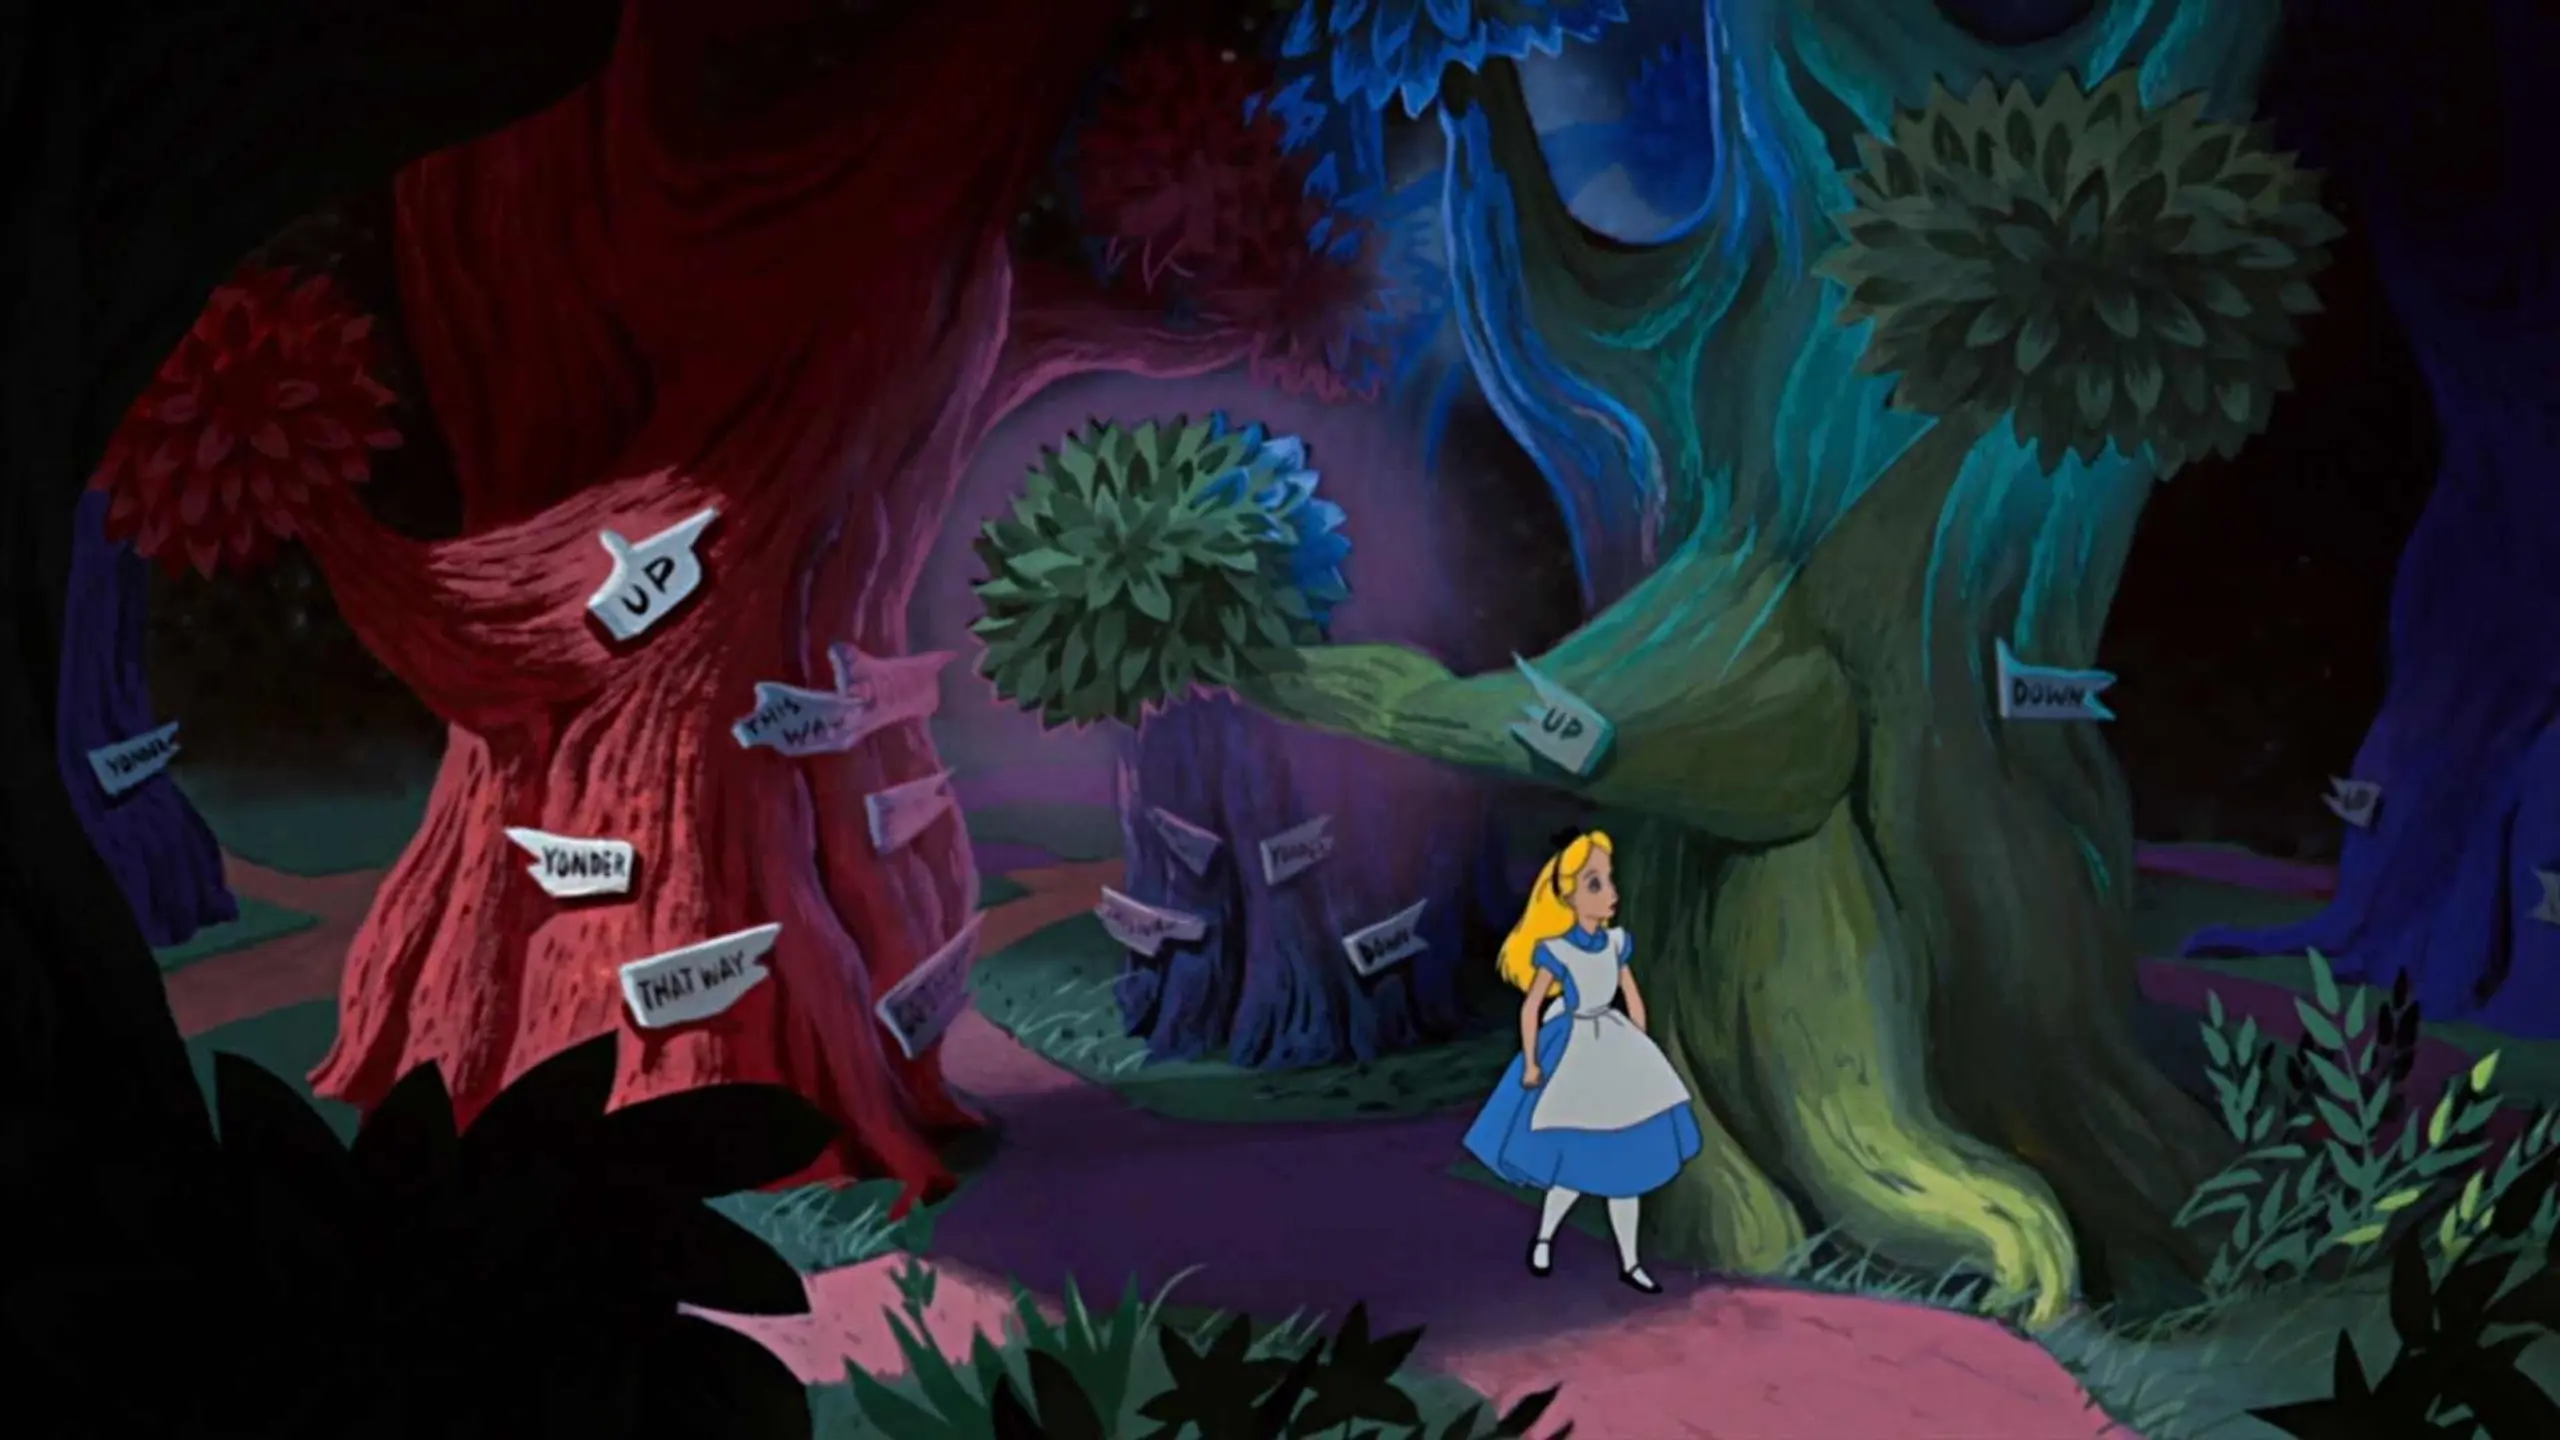 Alice im Wunderland